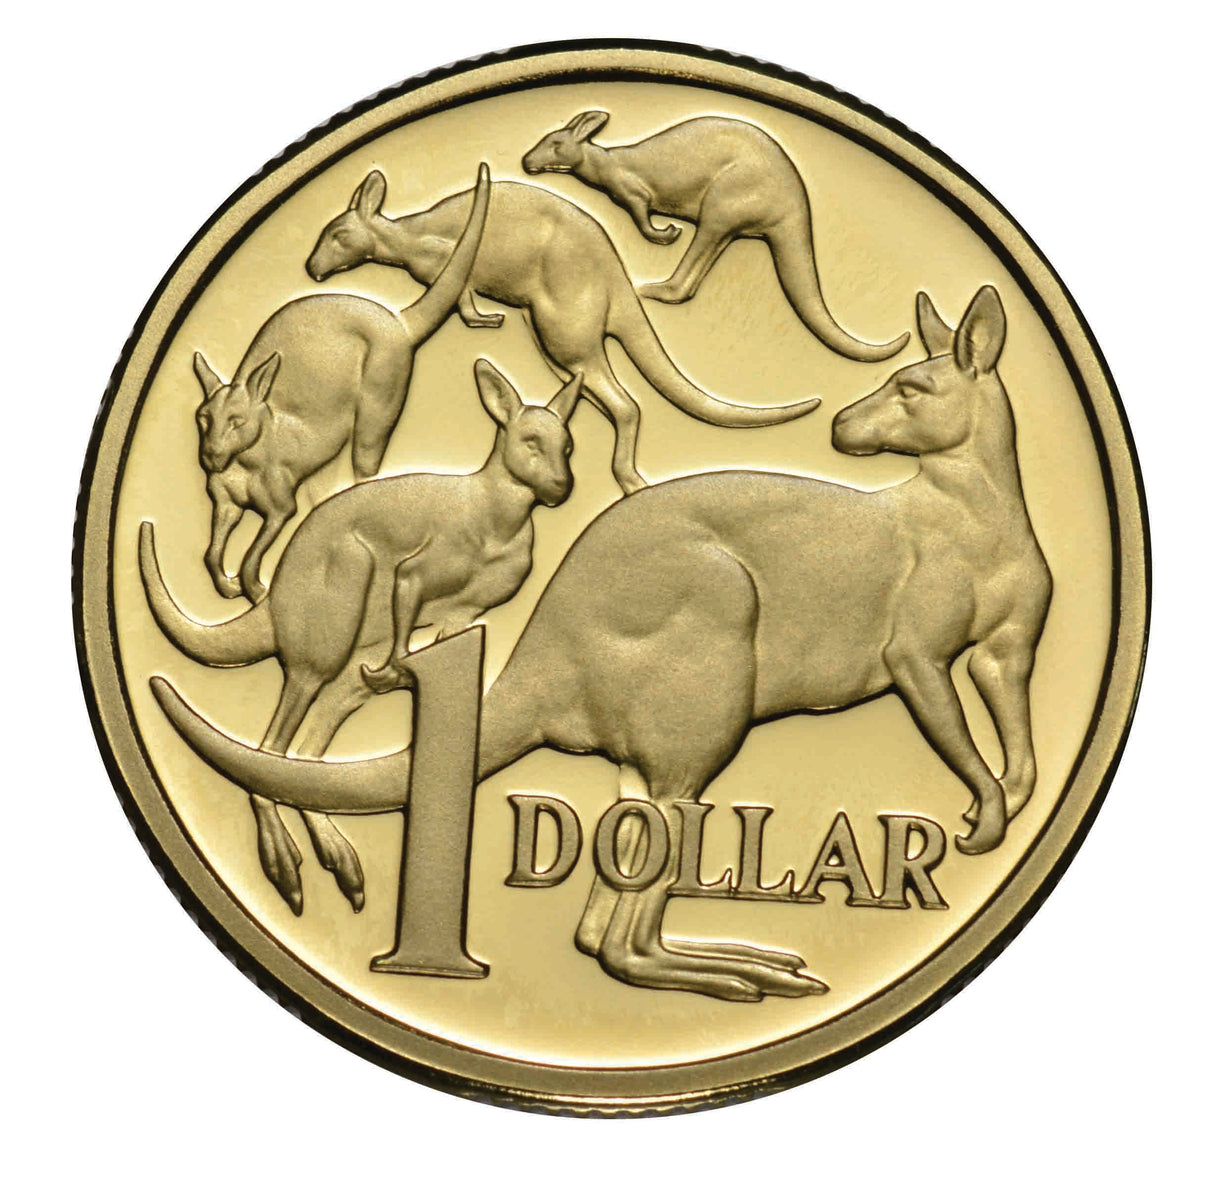 Australia $1 Last Note First Coin Premium Pack